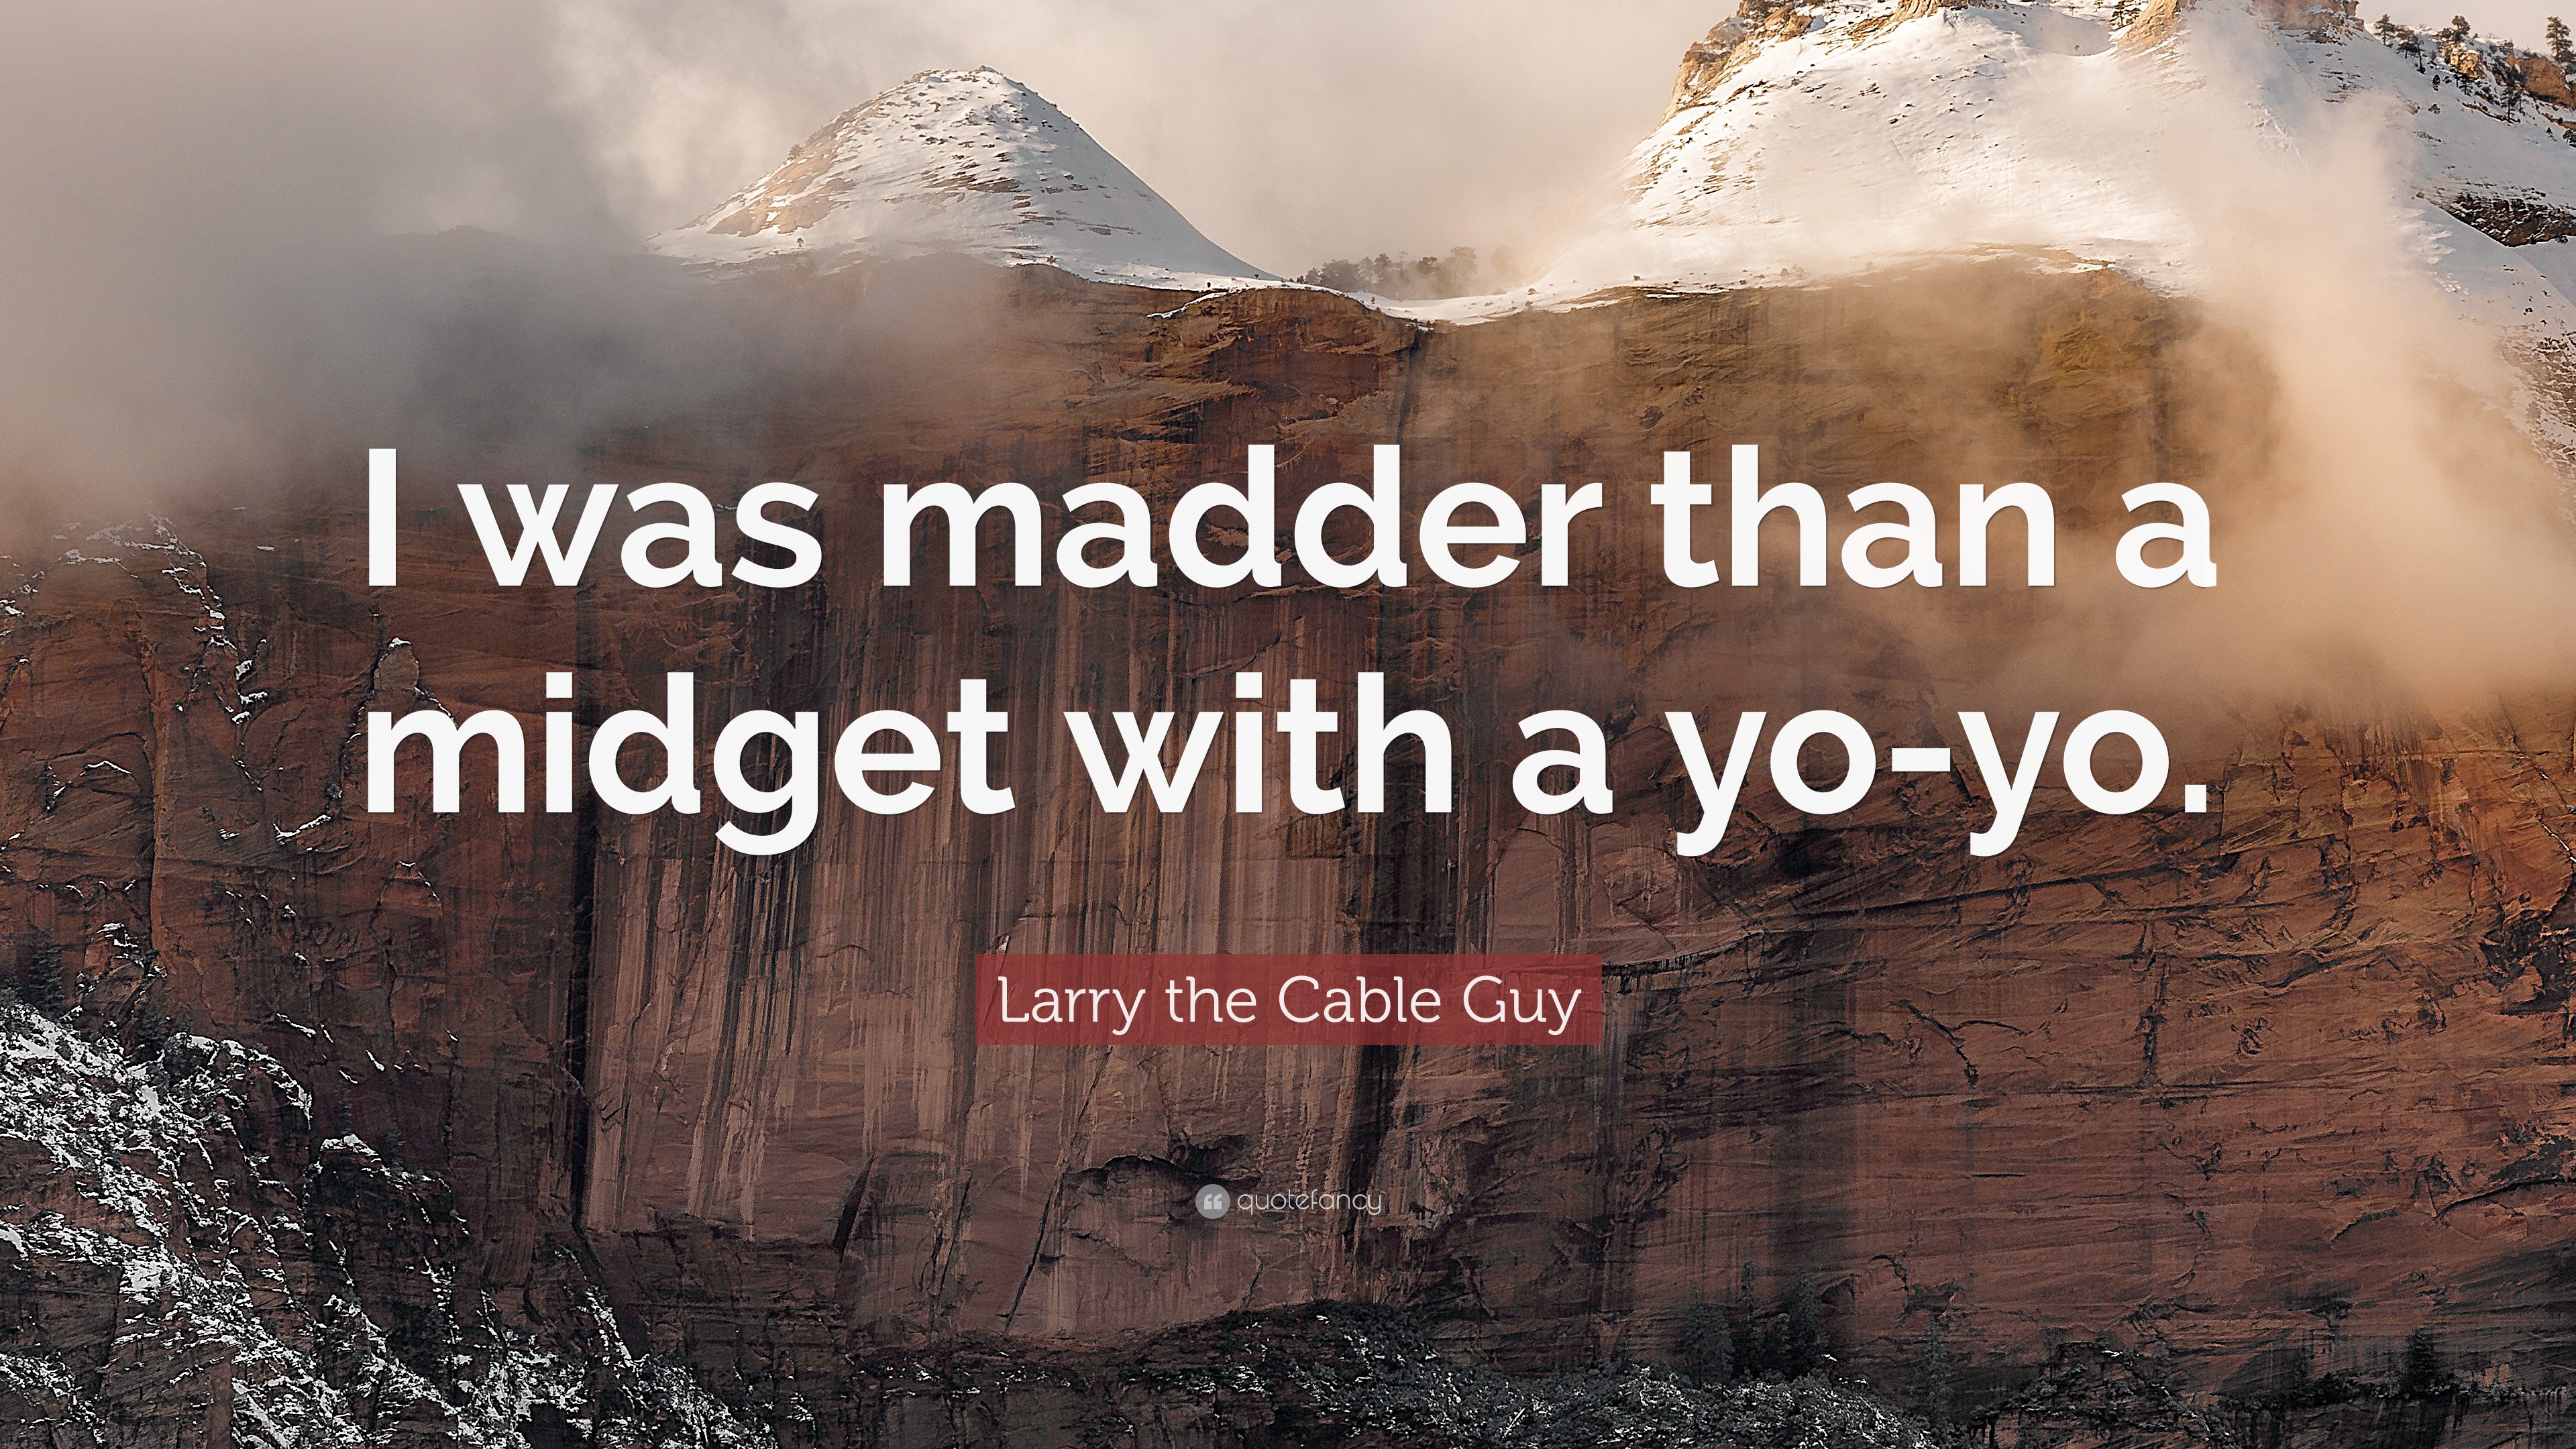 Estar confundido escalera mecánica notificación Larry the Cable Guy Quote: “I was madder than a midget with a yo-yo.”